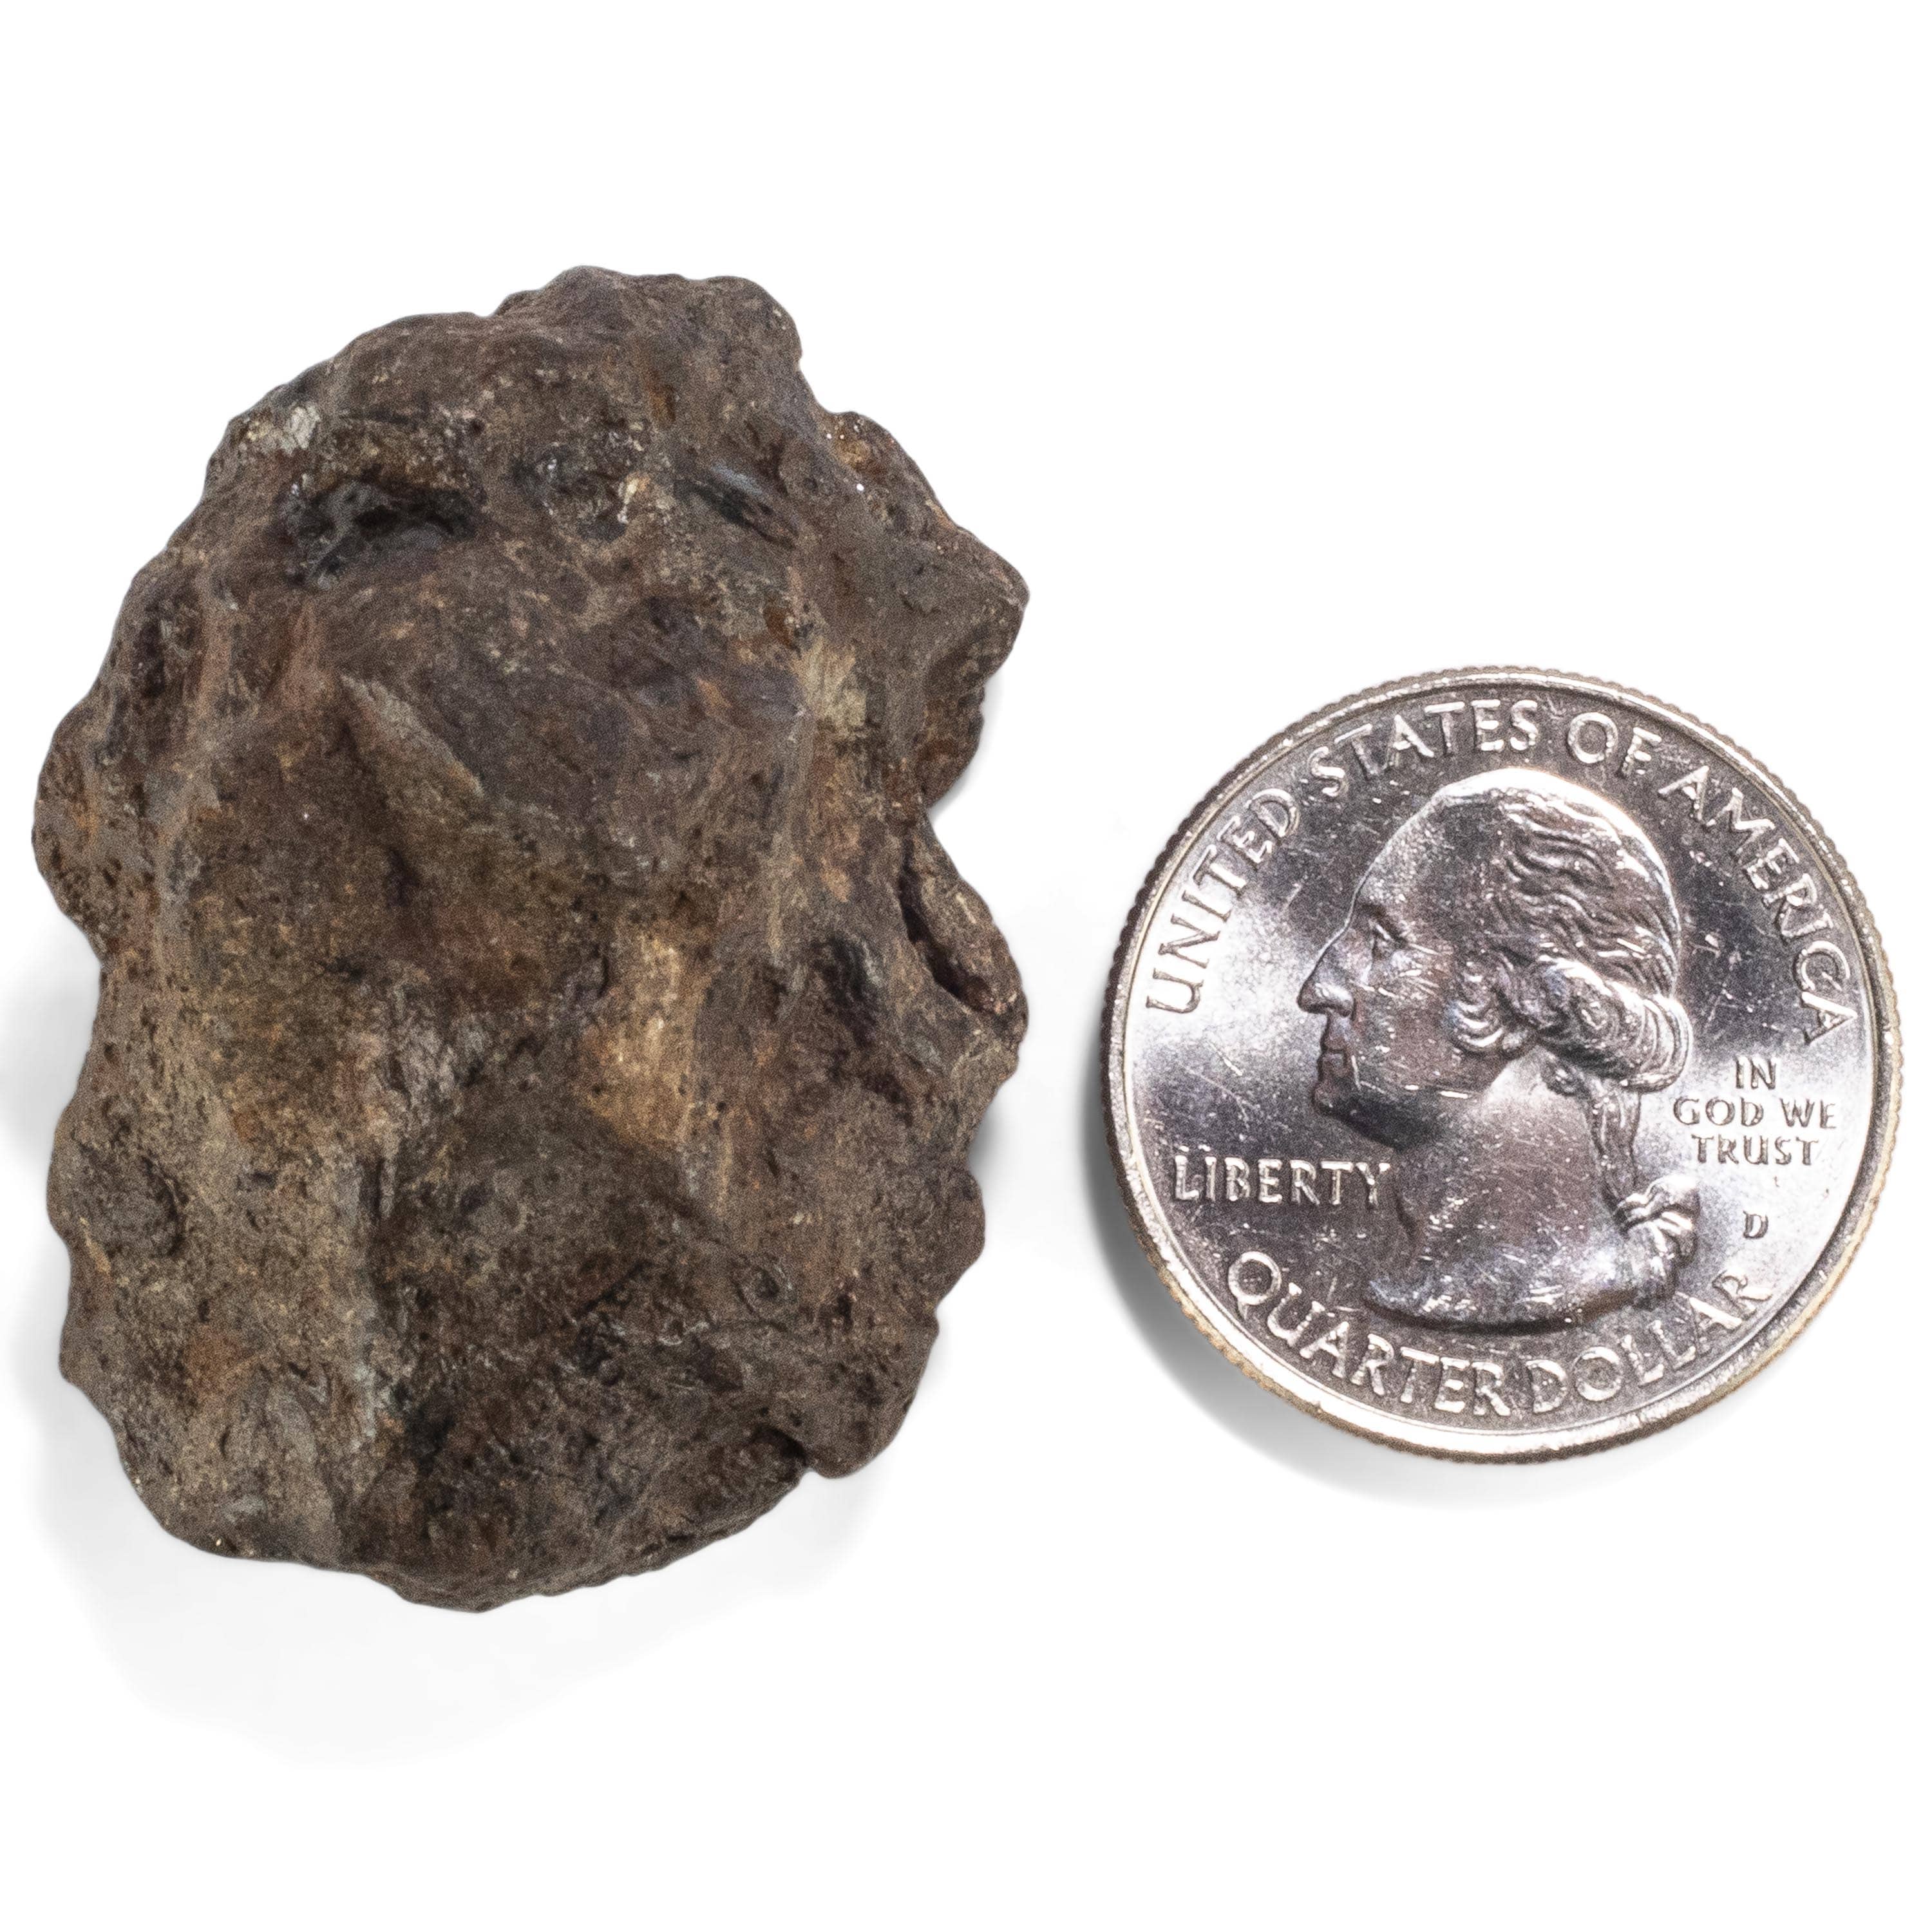 Kalifano Meteorites Sericho Iron Meteorite discovered in Kenya - 61.3 grams MTCHO1200.004